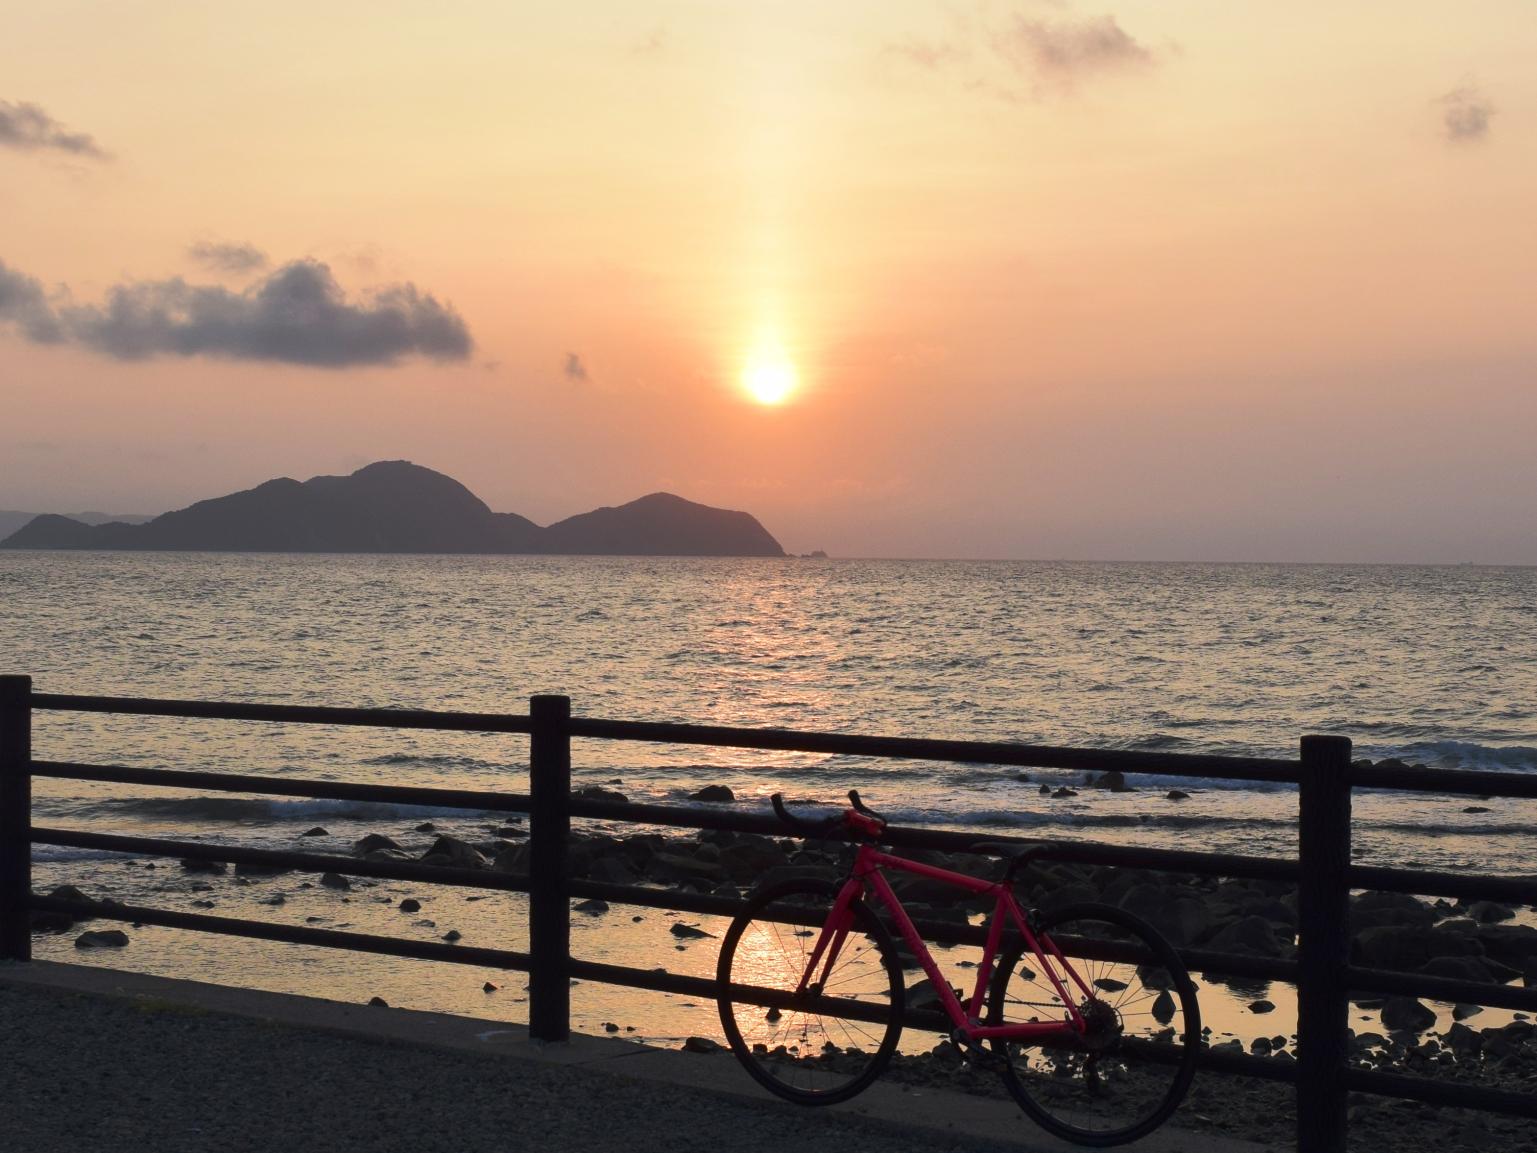 Onga/ Munakata Bicycle Trail (Cycling Road) where the sunset is beautiful